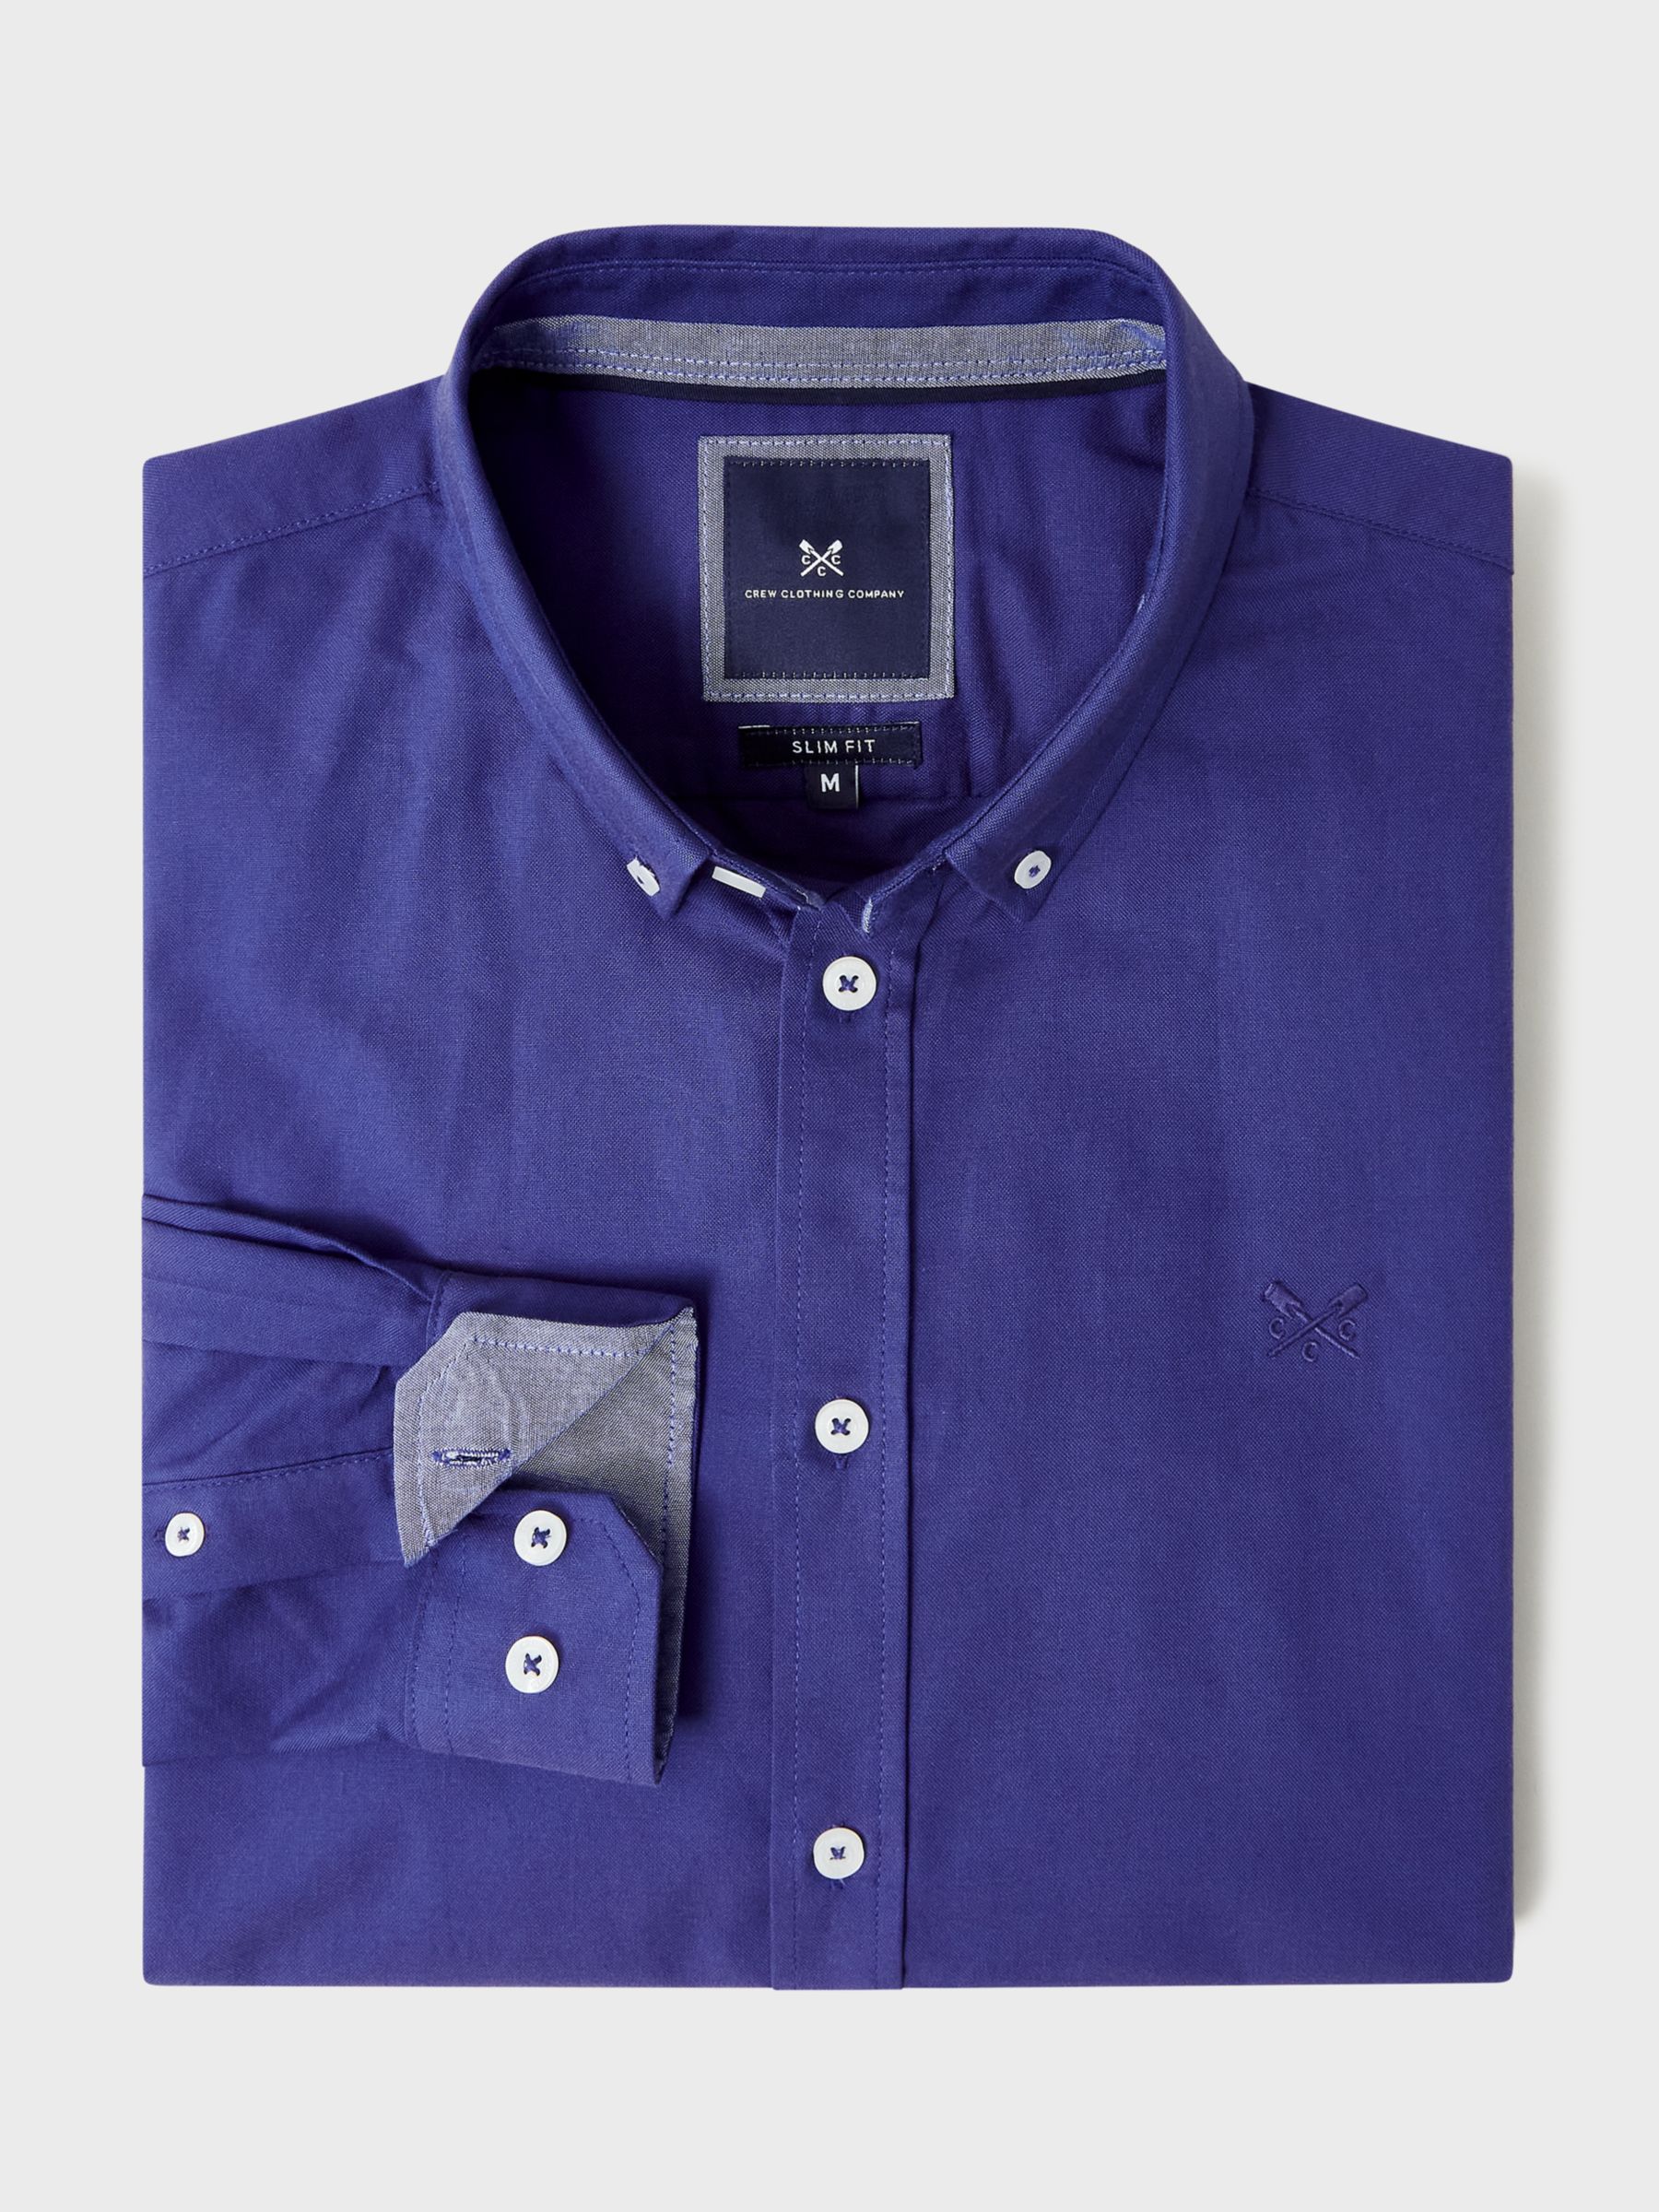 Crew Clothing Slim Fit Long Sleeve Oxford Shirt, Dark Blue, XS